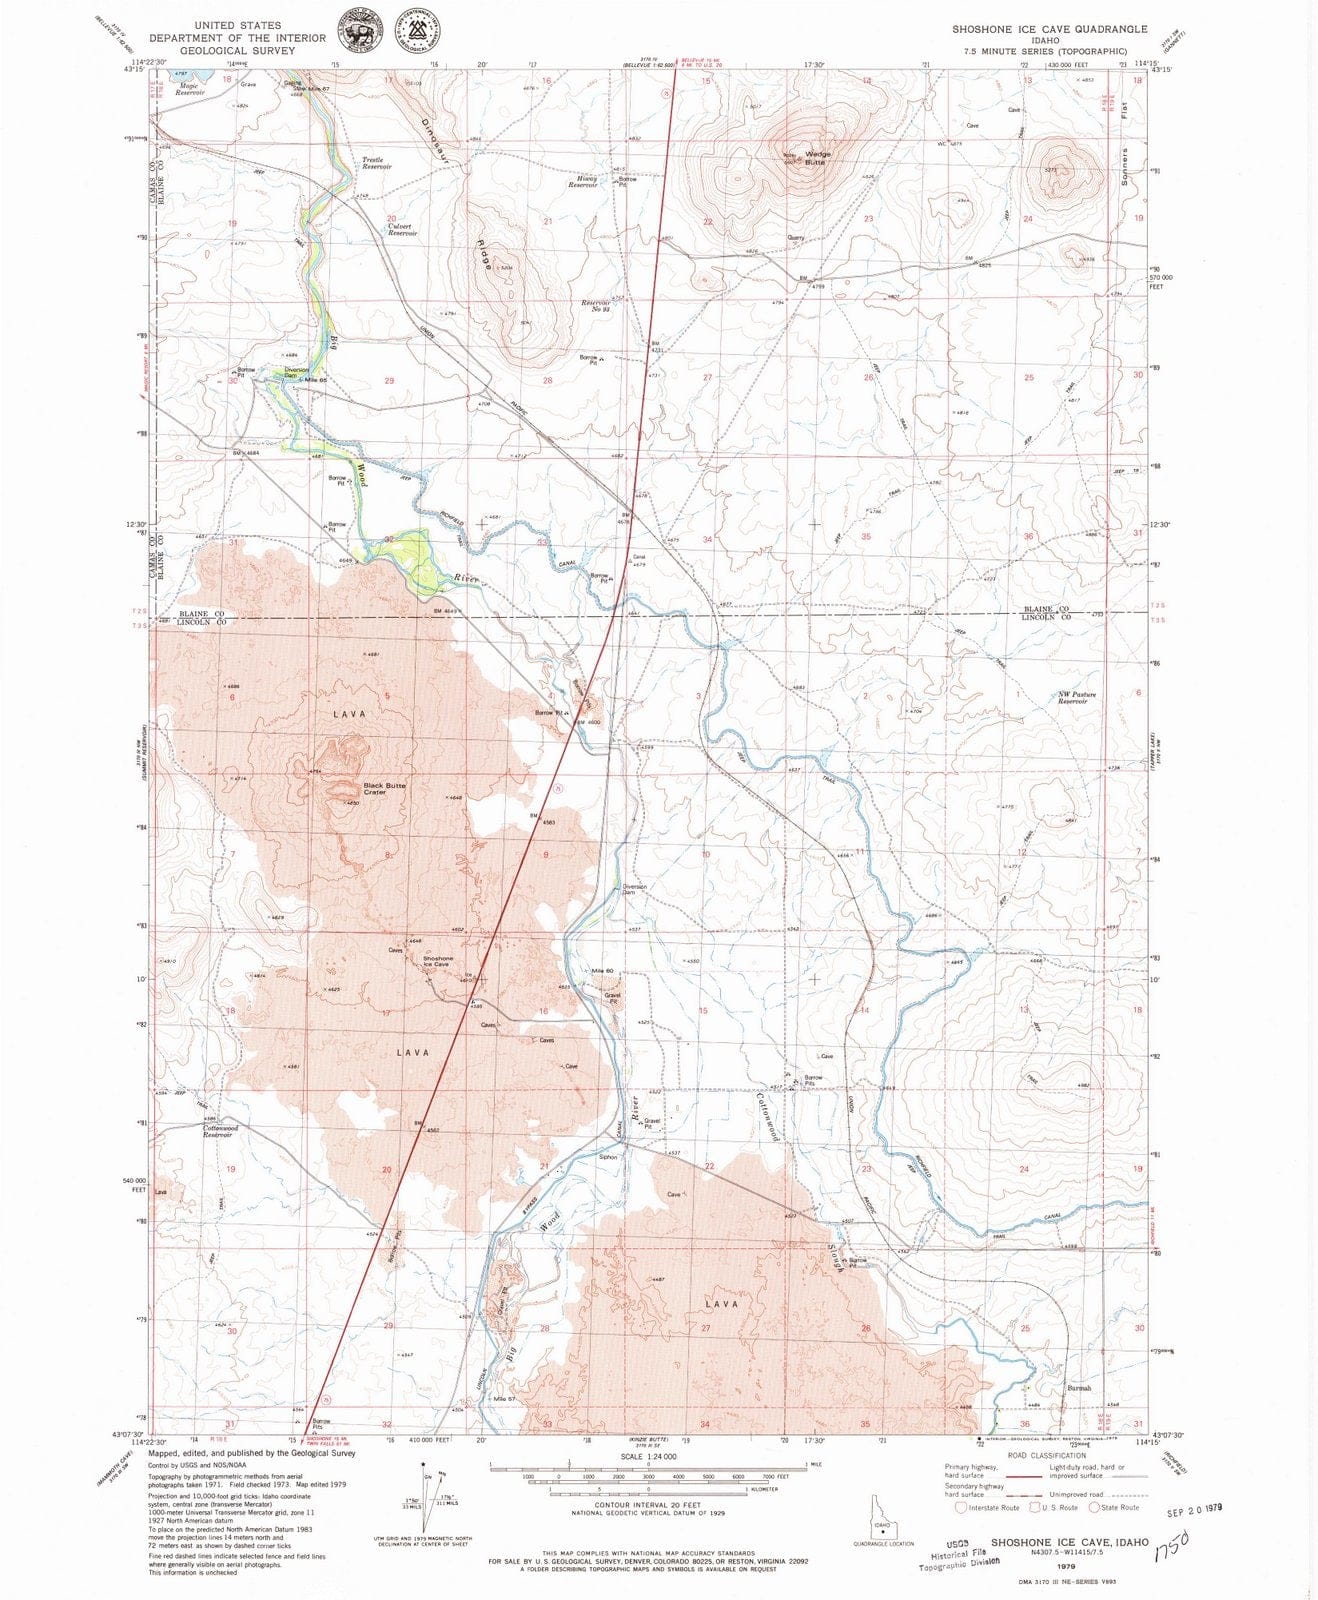 1979 Shoshone Ice Cave, ID - Idaho - USGS Topographic Map